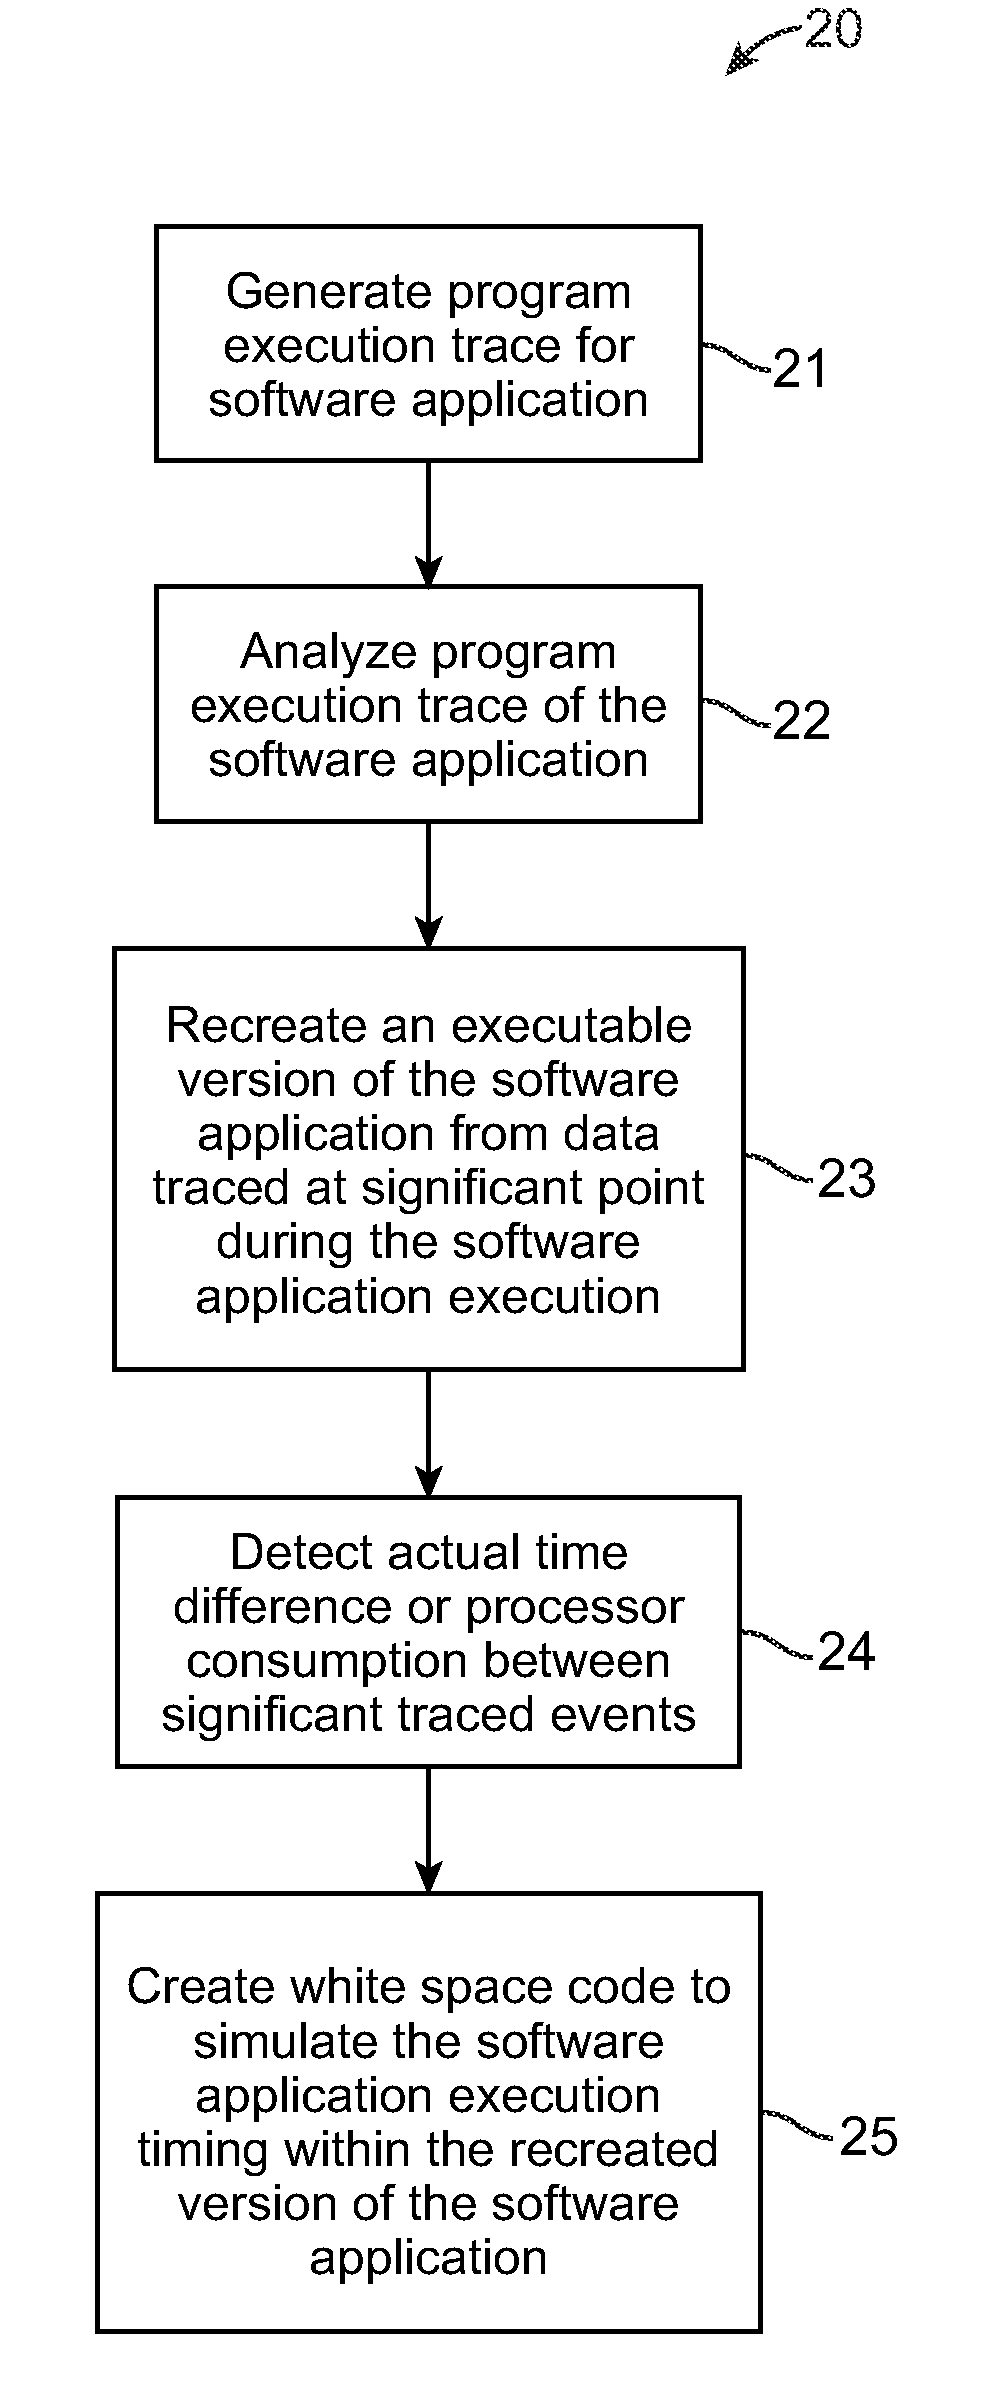 Software application recreation